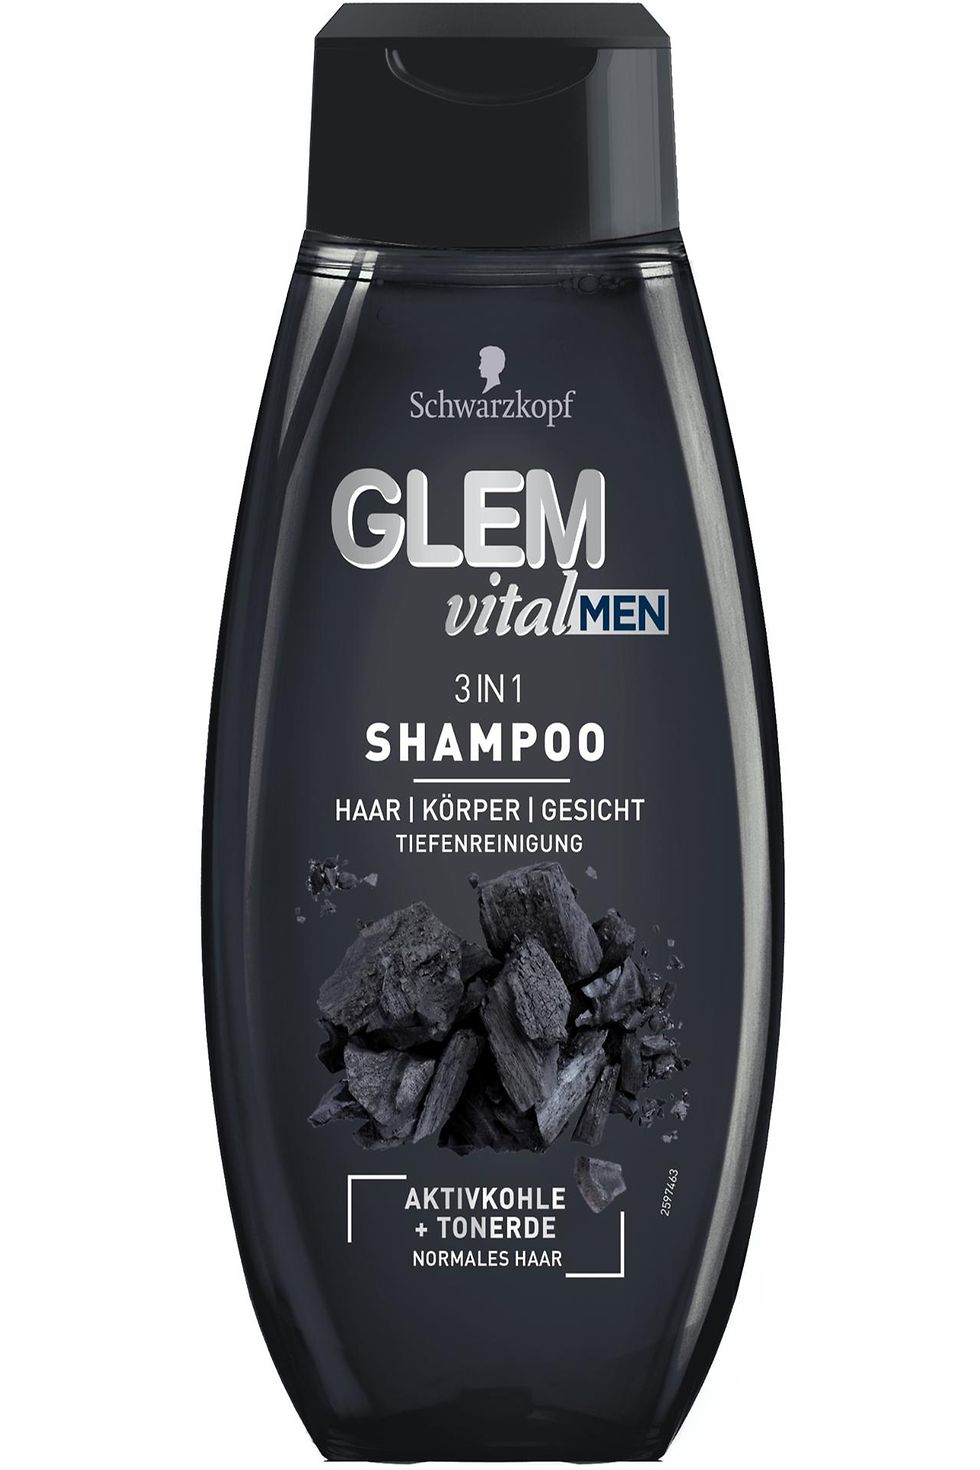 Glem vital Men 3in1 Shampoo Aktivkohle + Tonerde